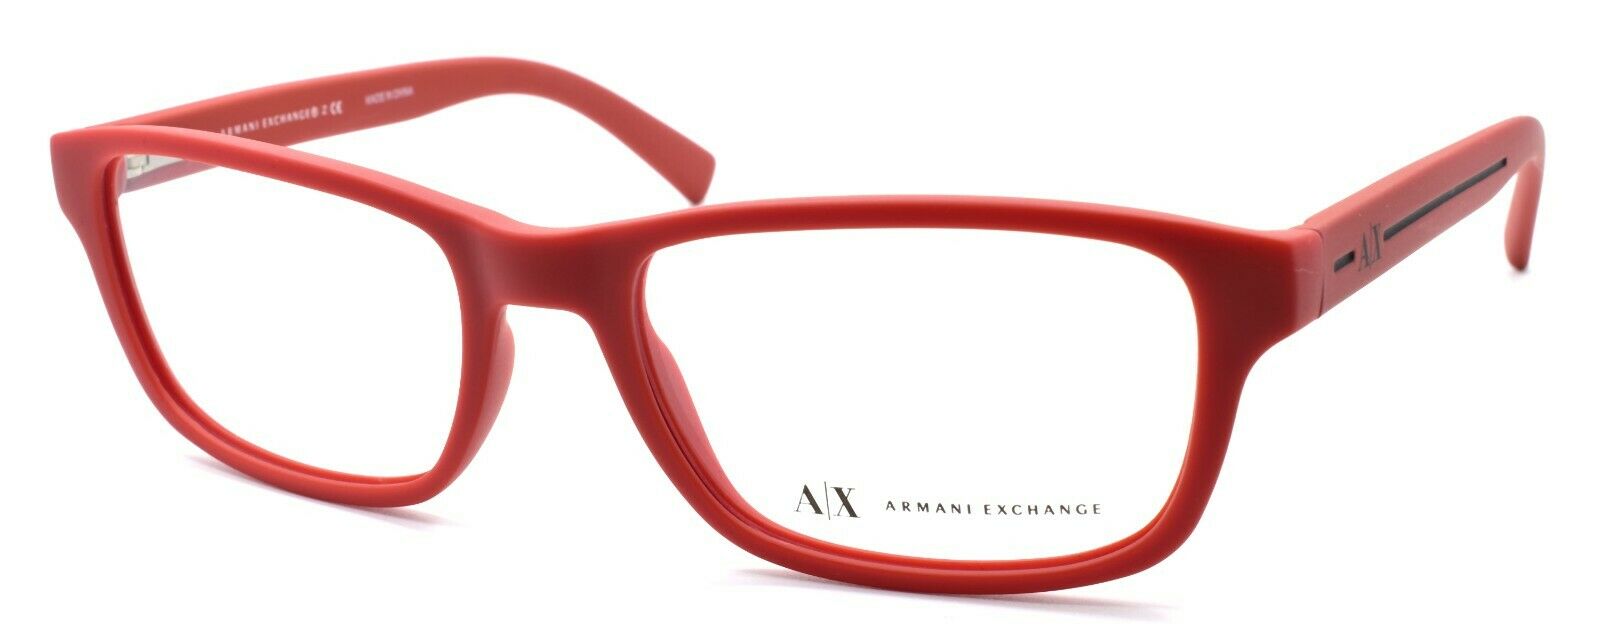 1-Armani Exchange AX3021 8155 Eyeglasses Frames 54-17-140 Matte Red-8053672409963-IKSpecs